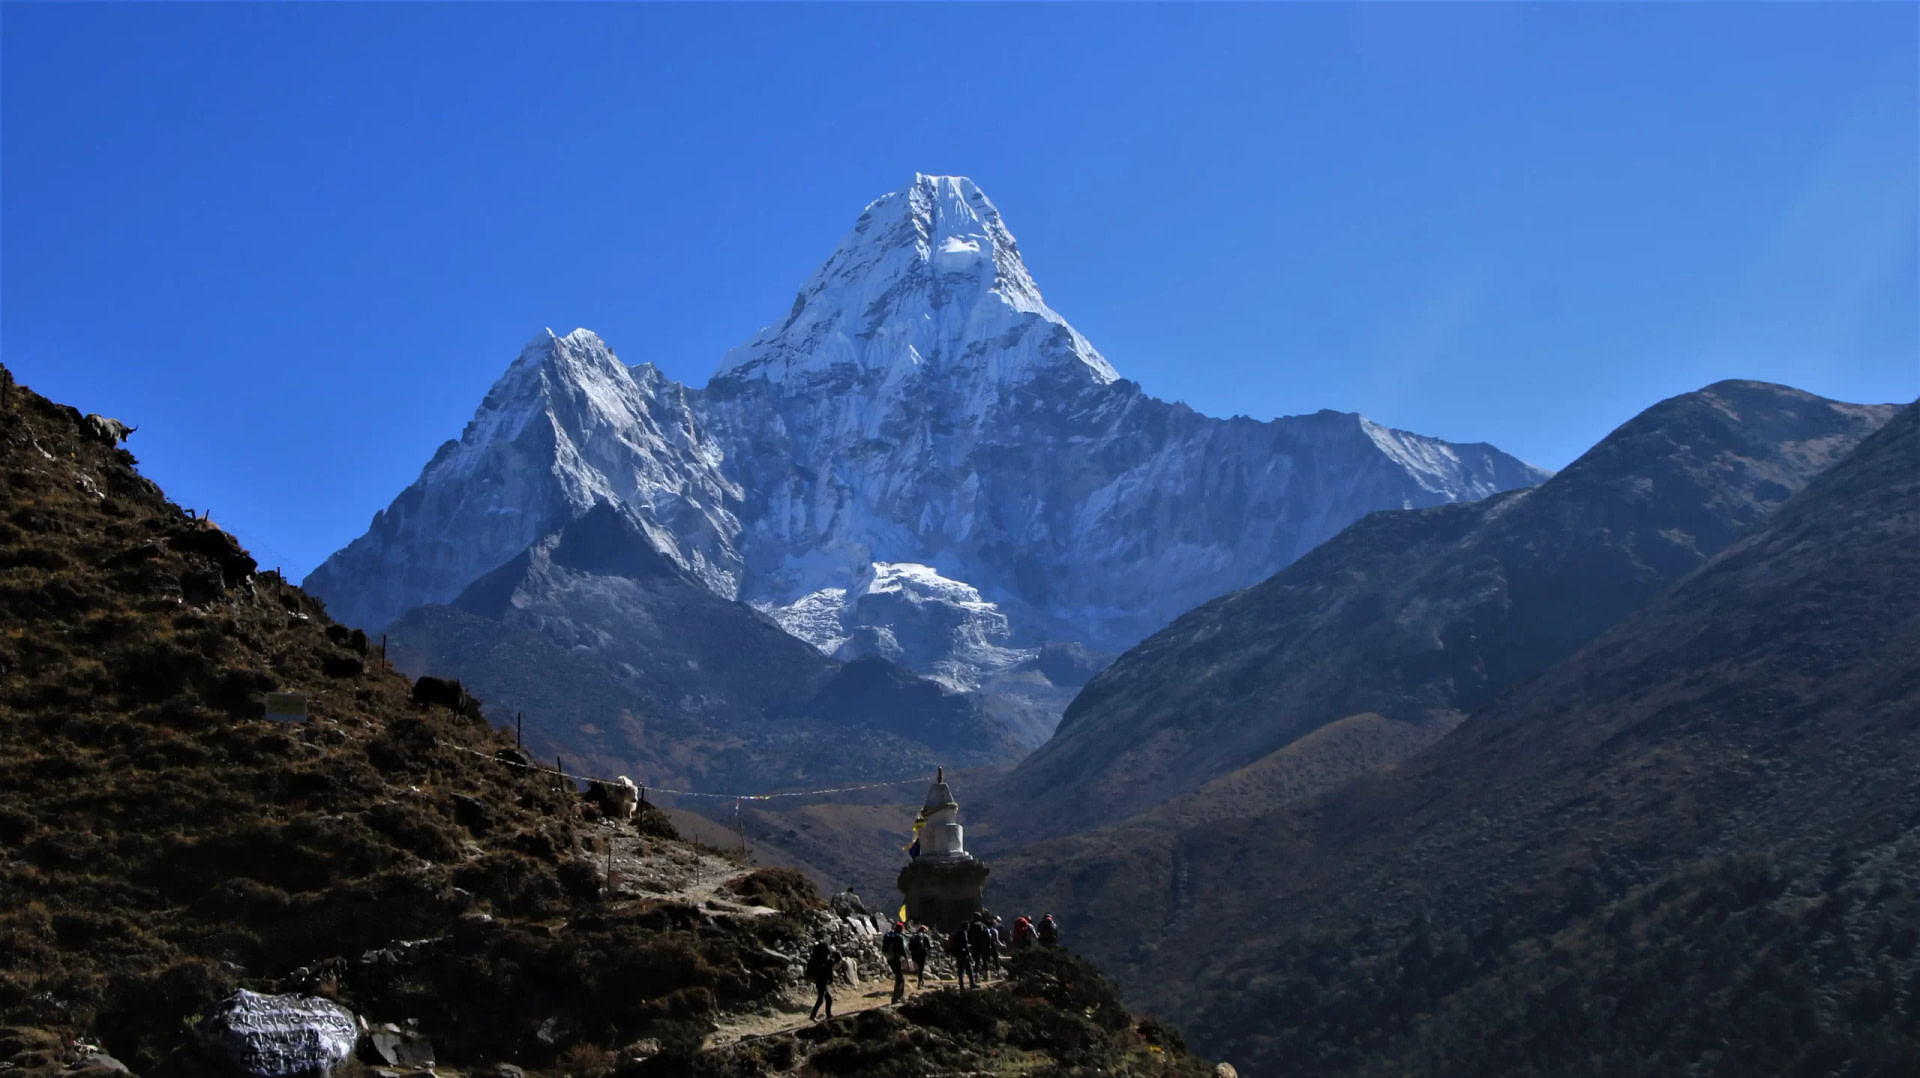 The Everest Three Passes Trek is a High Altitude Adventure